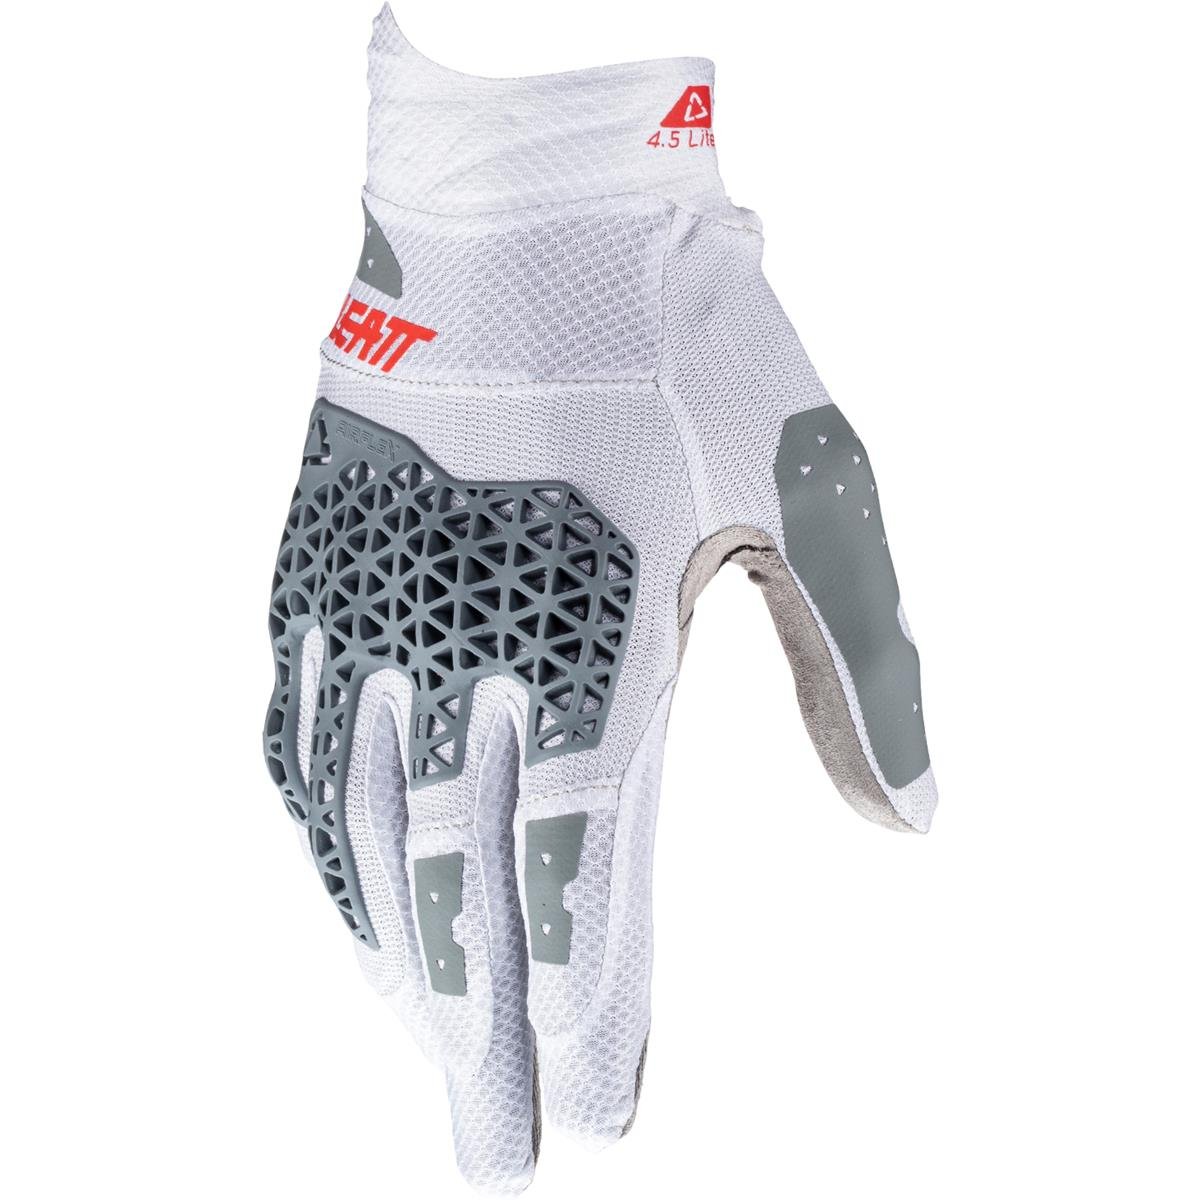 Leatt Handschuhe Moto 4.5 Lite Weiß/Grau/Rot